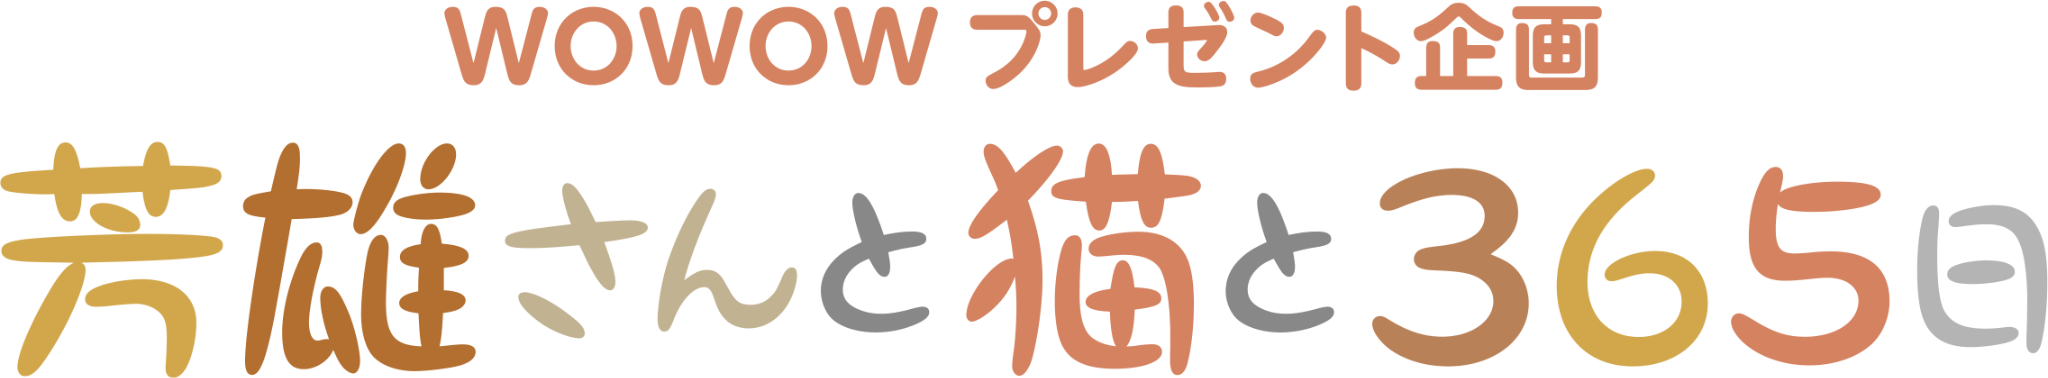 WOWOWプレゼント企画 芳雄さんと猫と365日